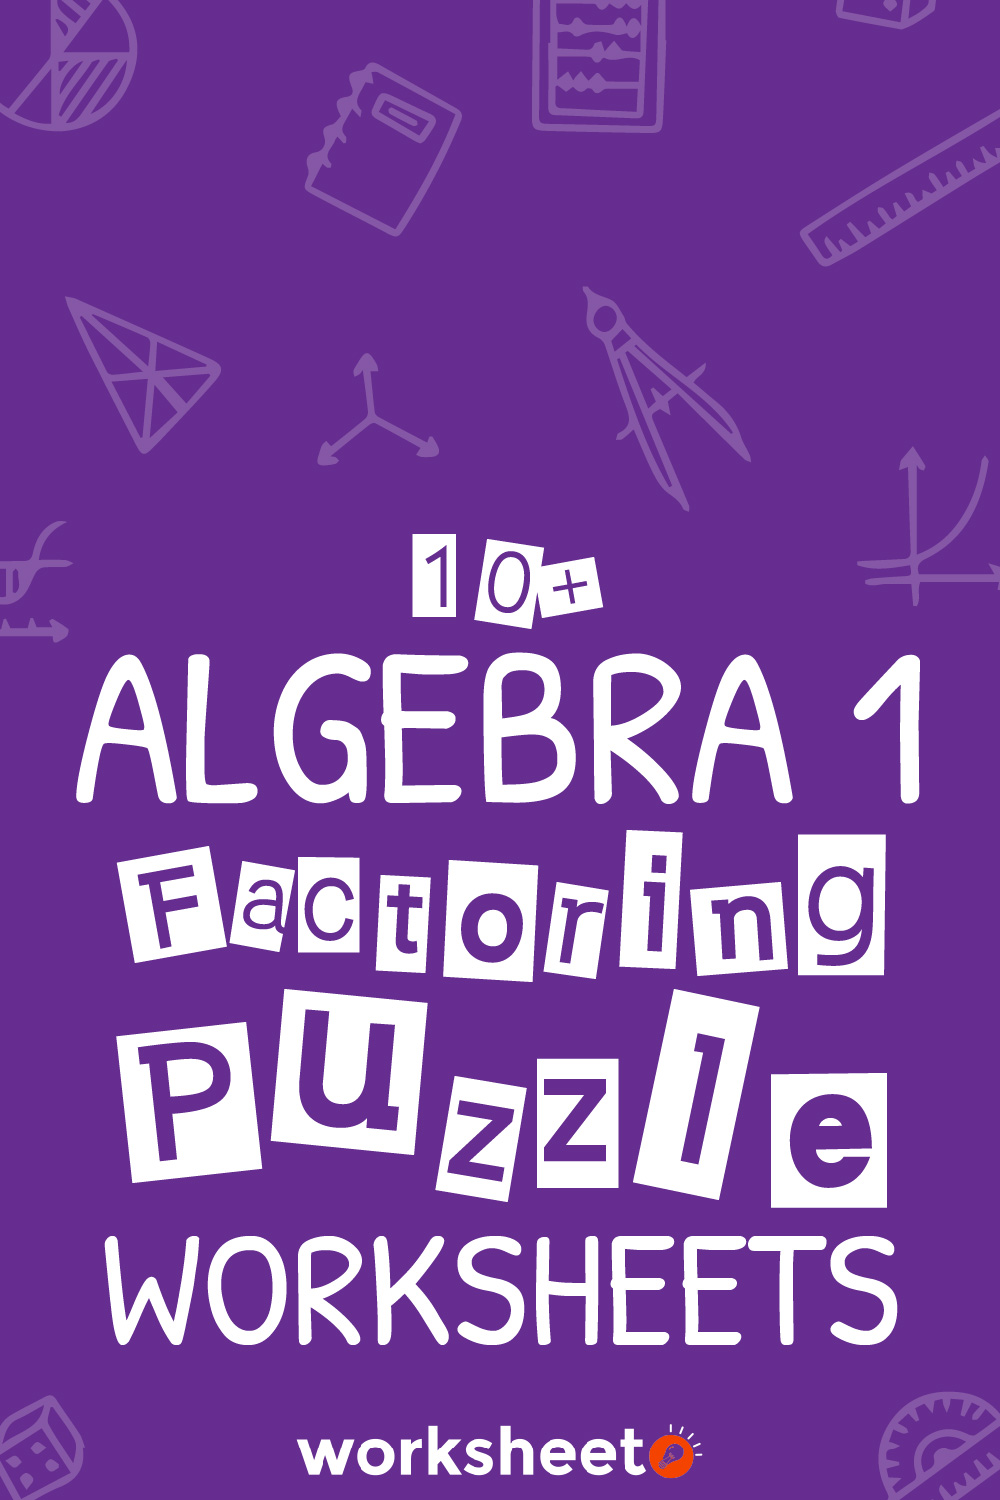 16 Images of Algebra 1 Factoring Puzzle Worksheets